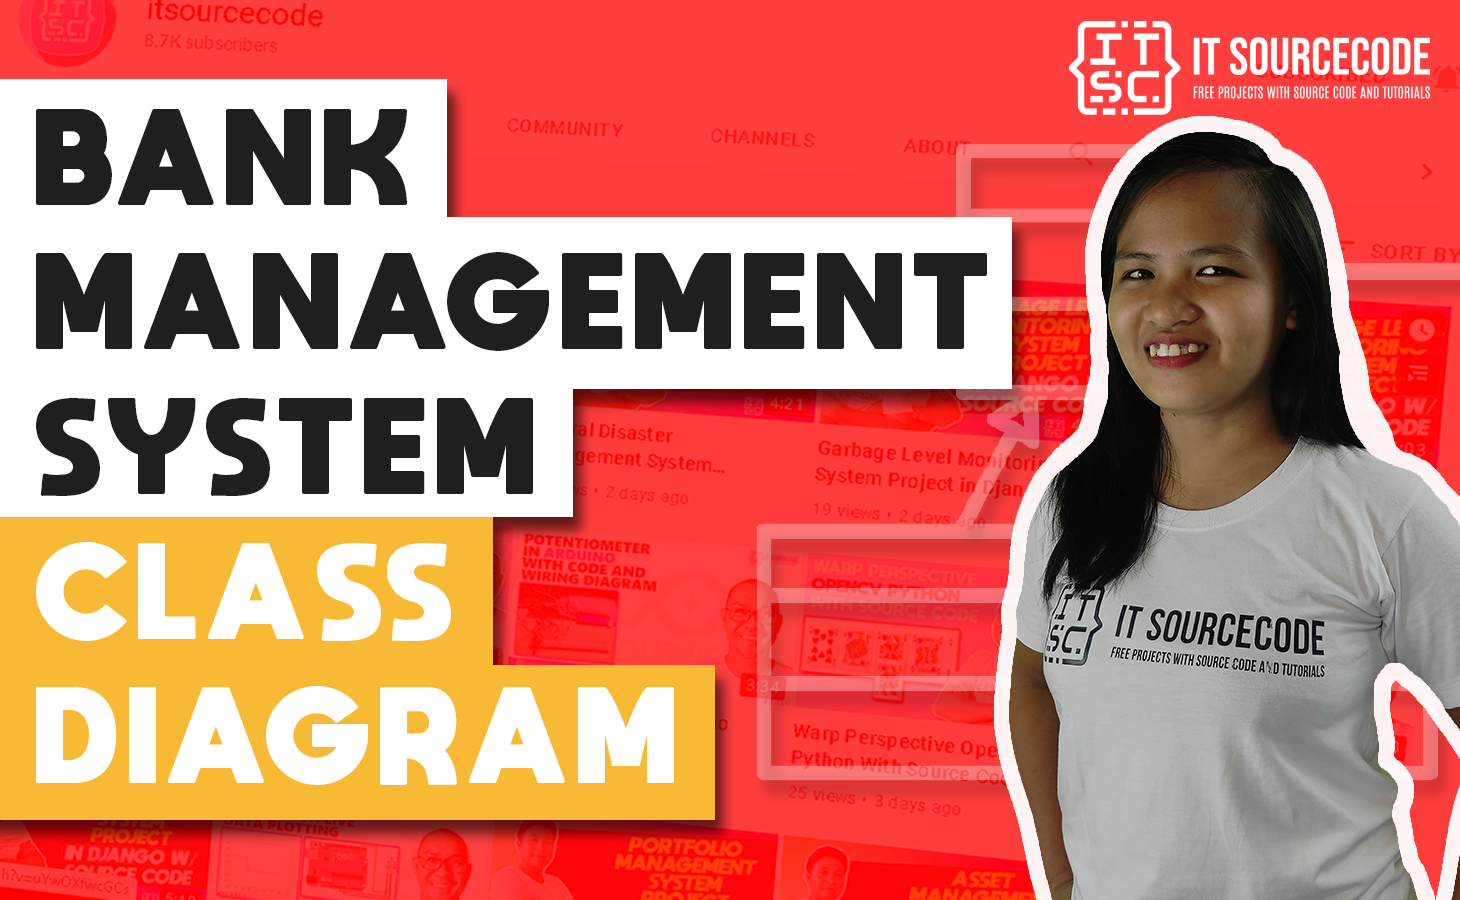 Bank Management System Class Diagram